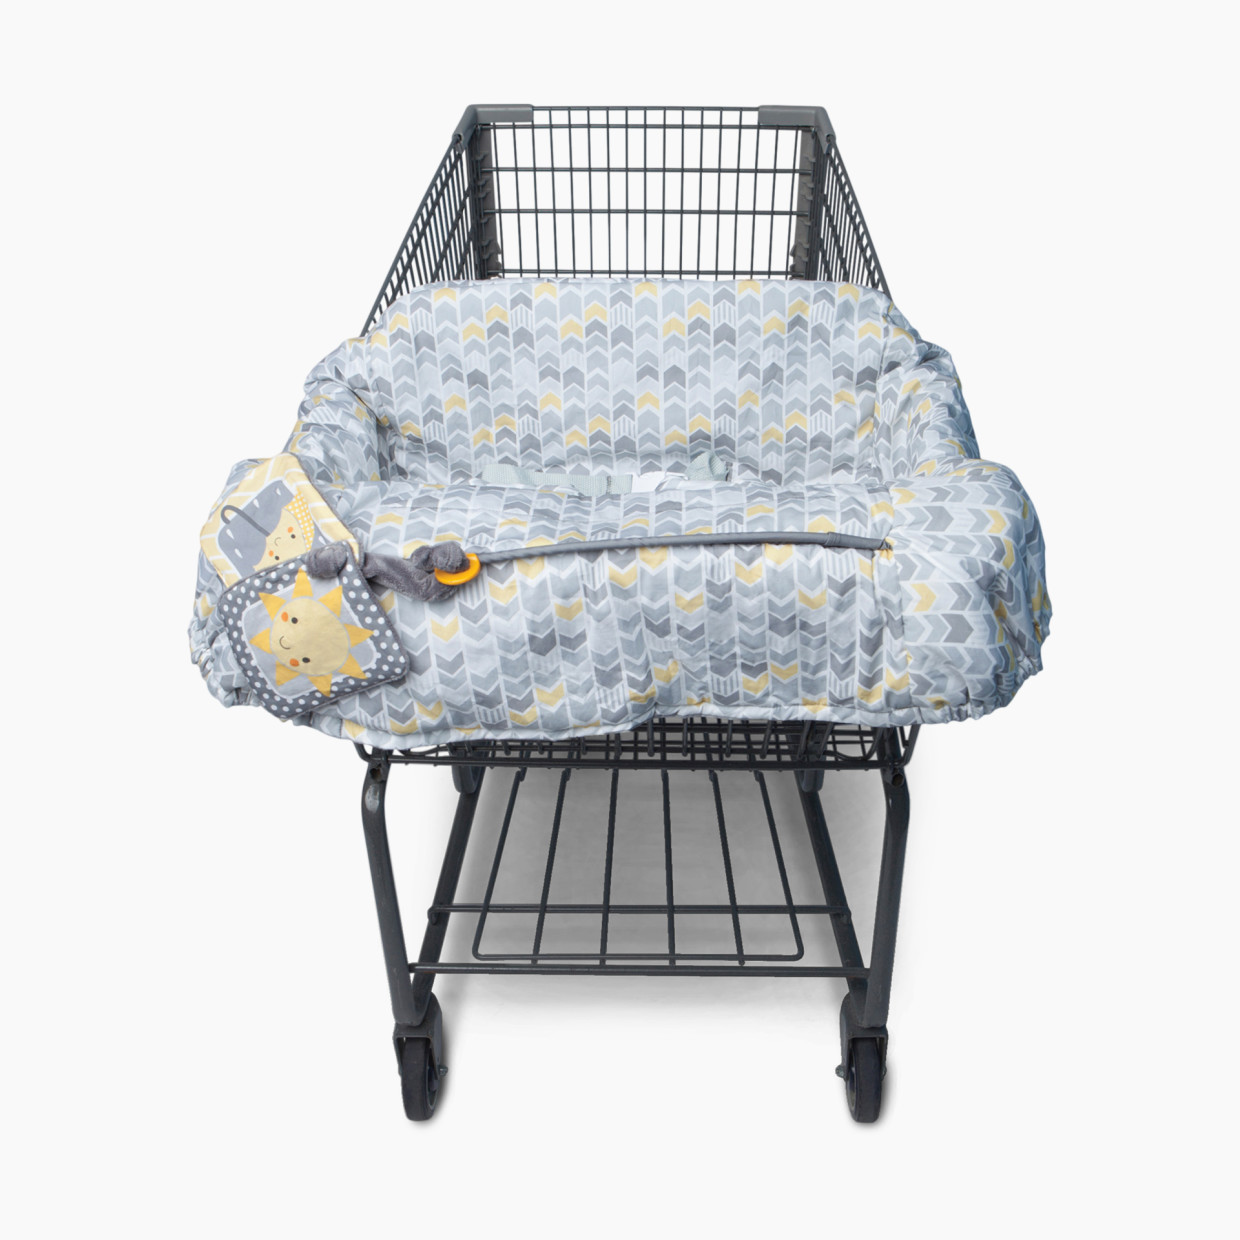 Boppy Shopping Cart and Restaurant High Chair Cover - Sunshine.